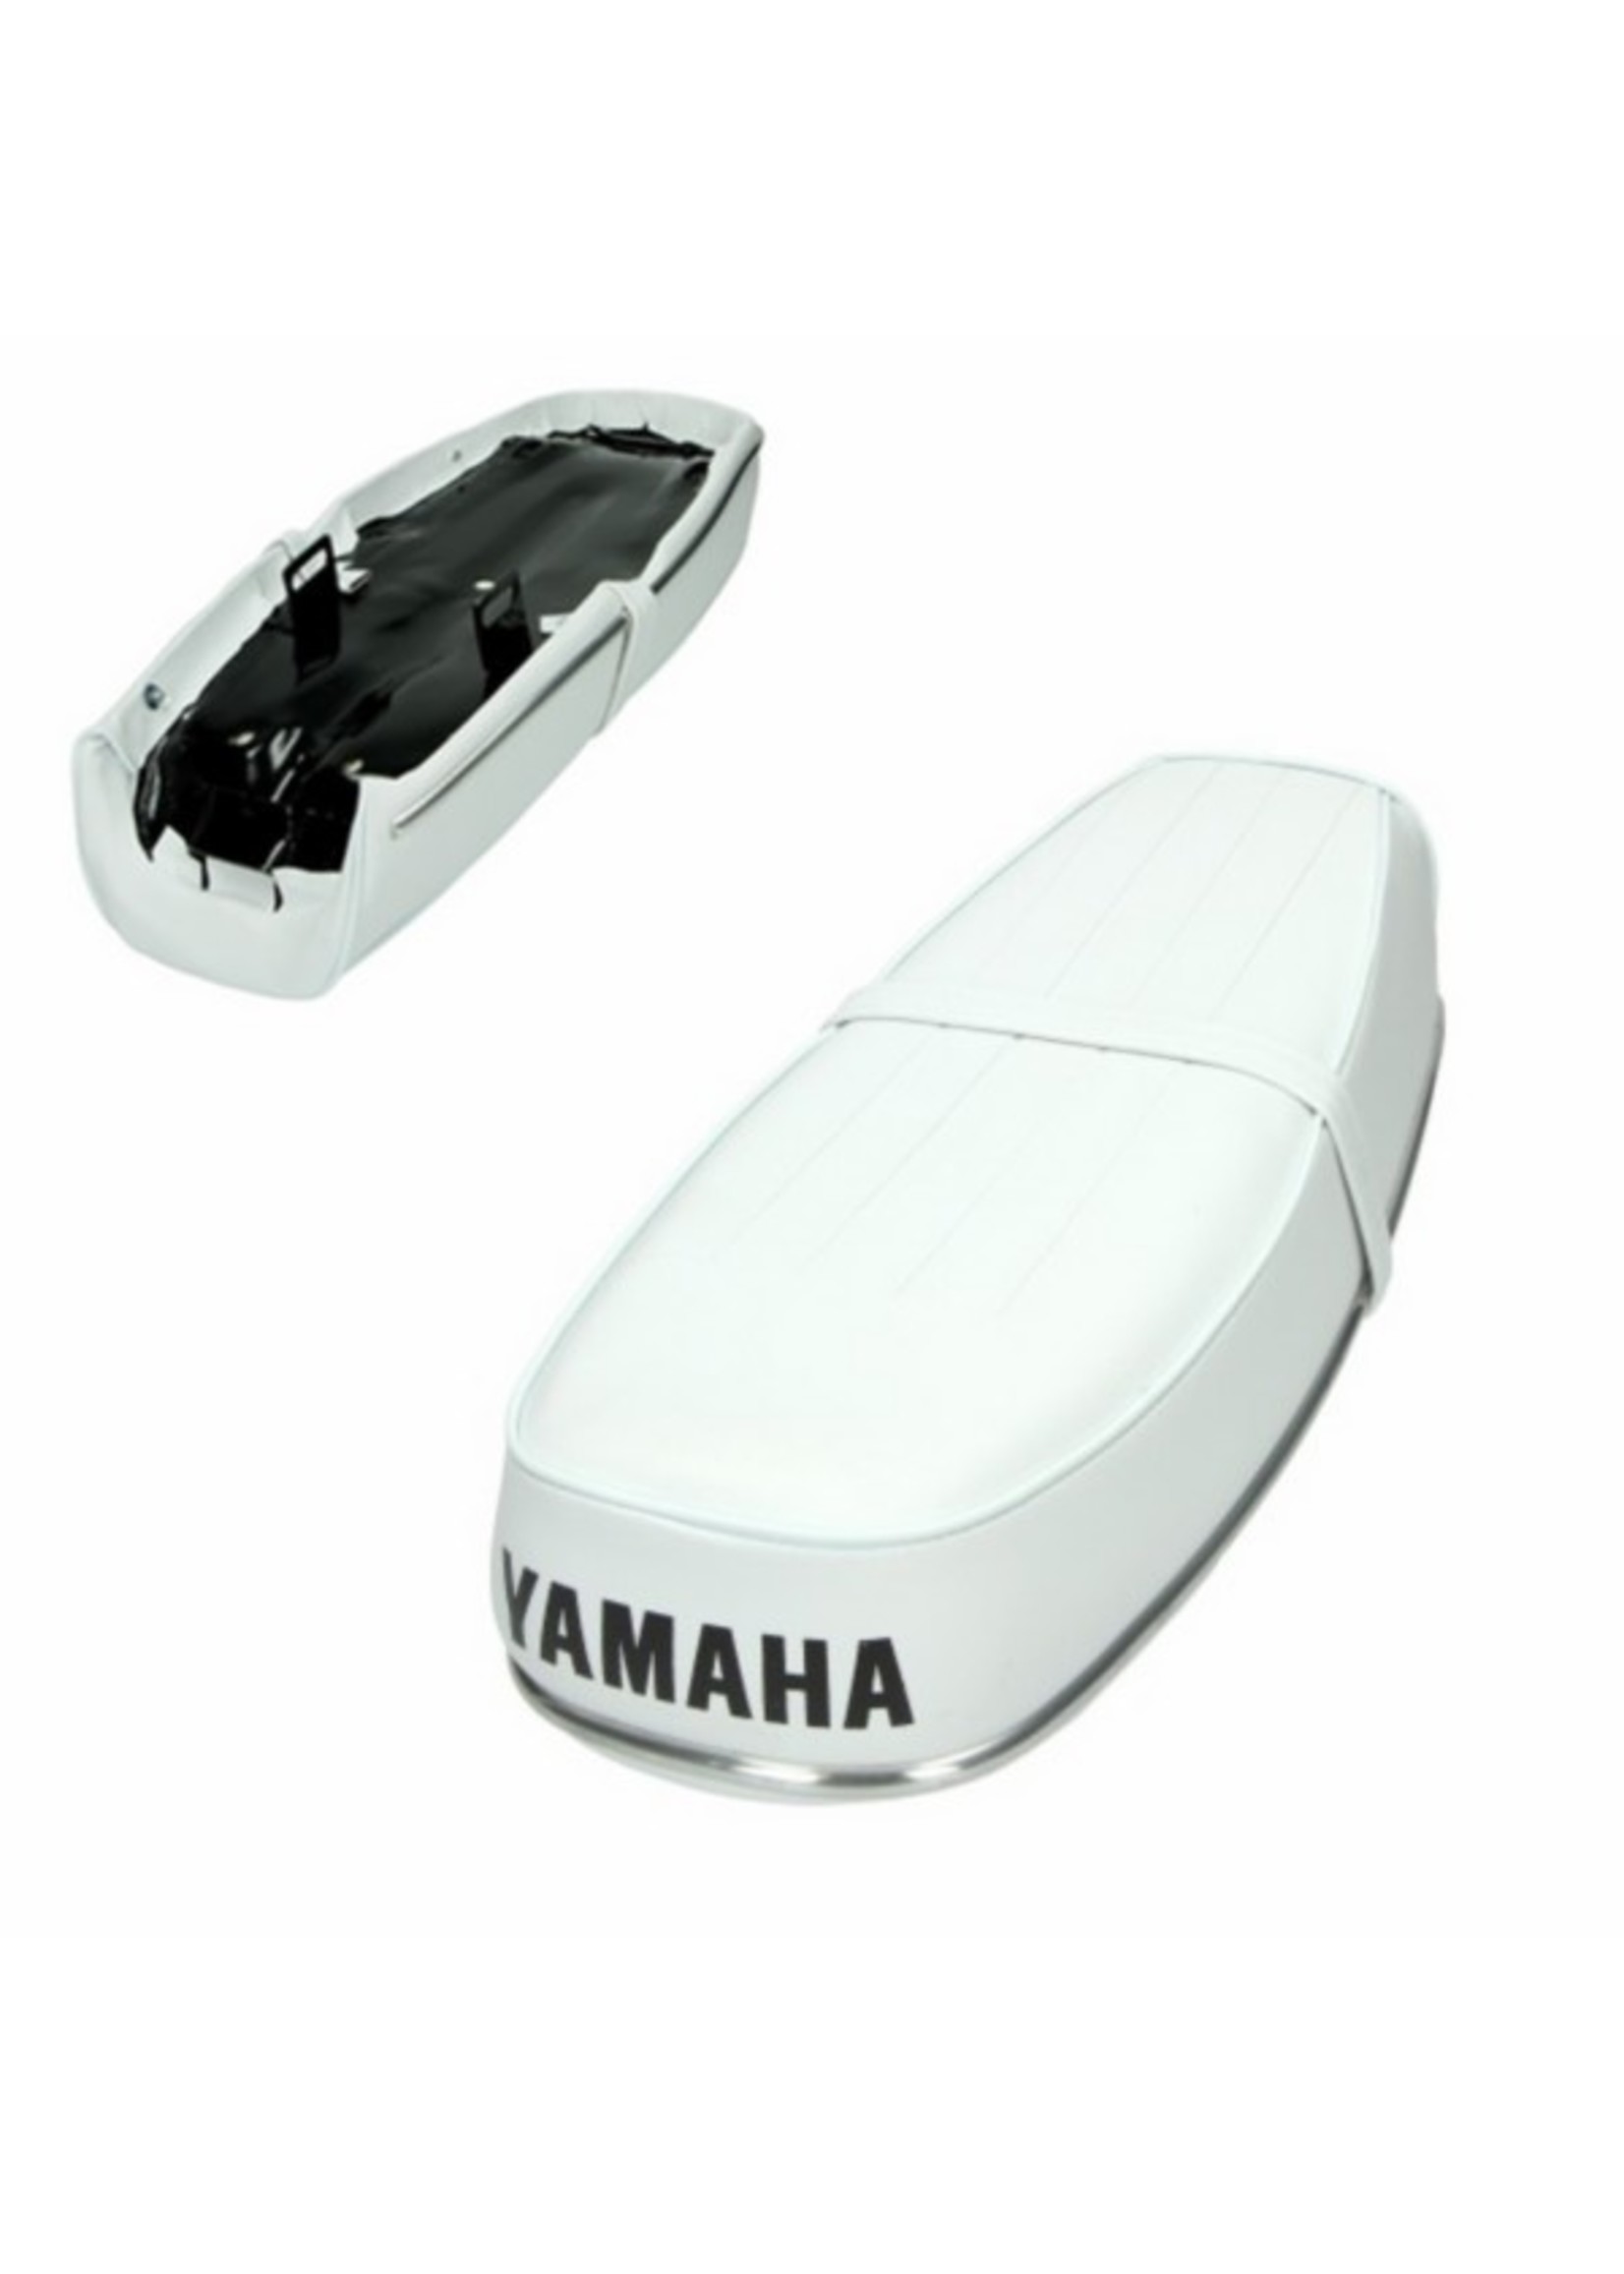 Yamaha buddyseat mod. orig (past op alle modellen) fs1 wit